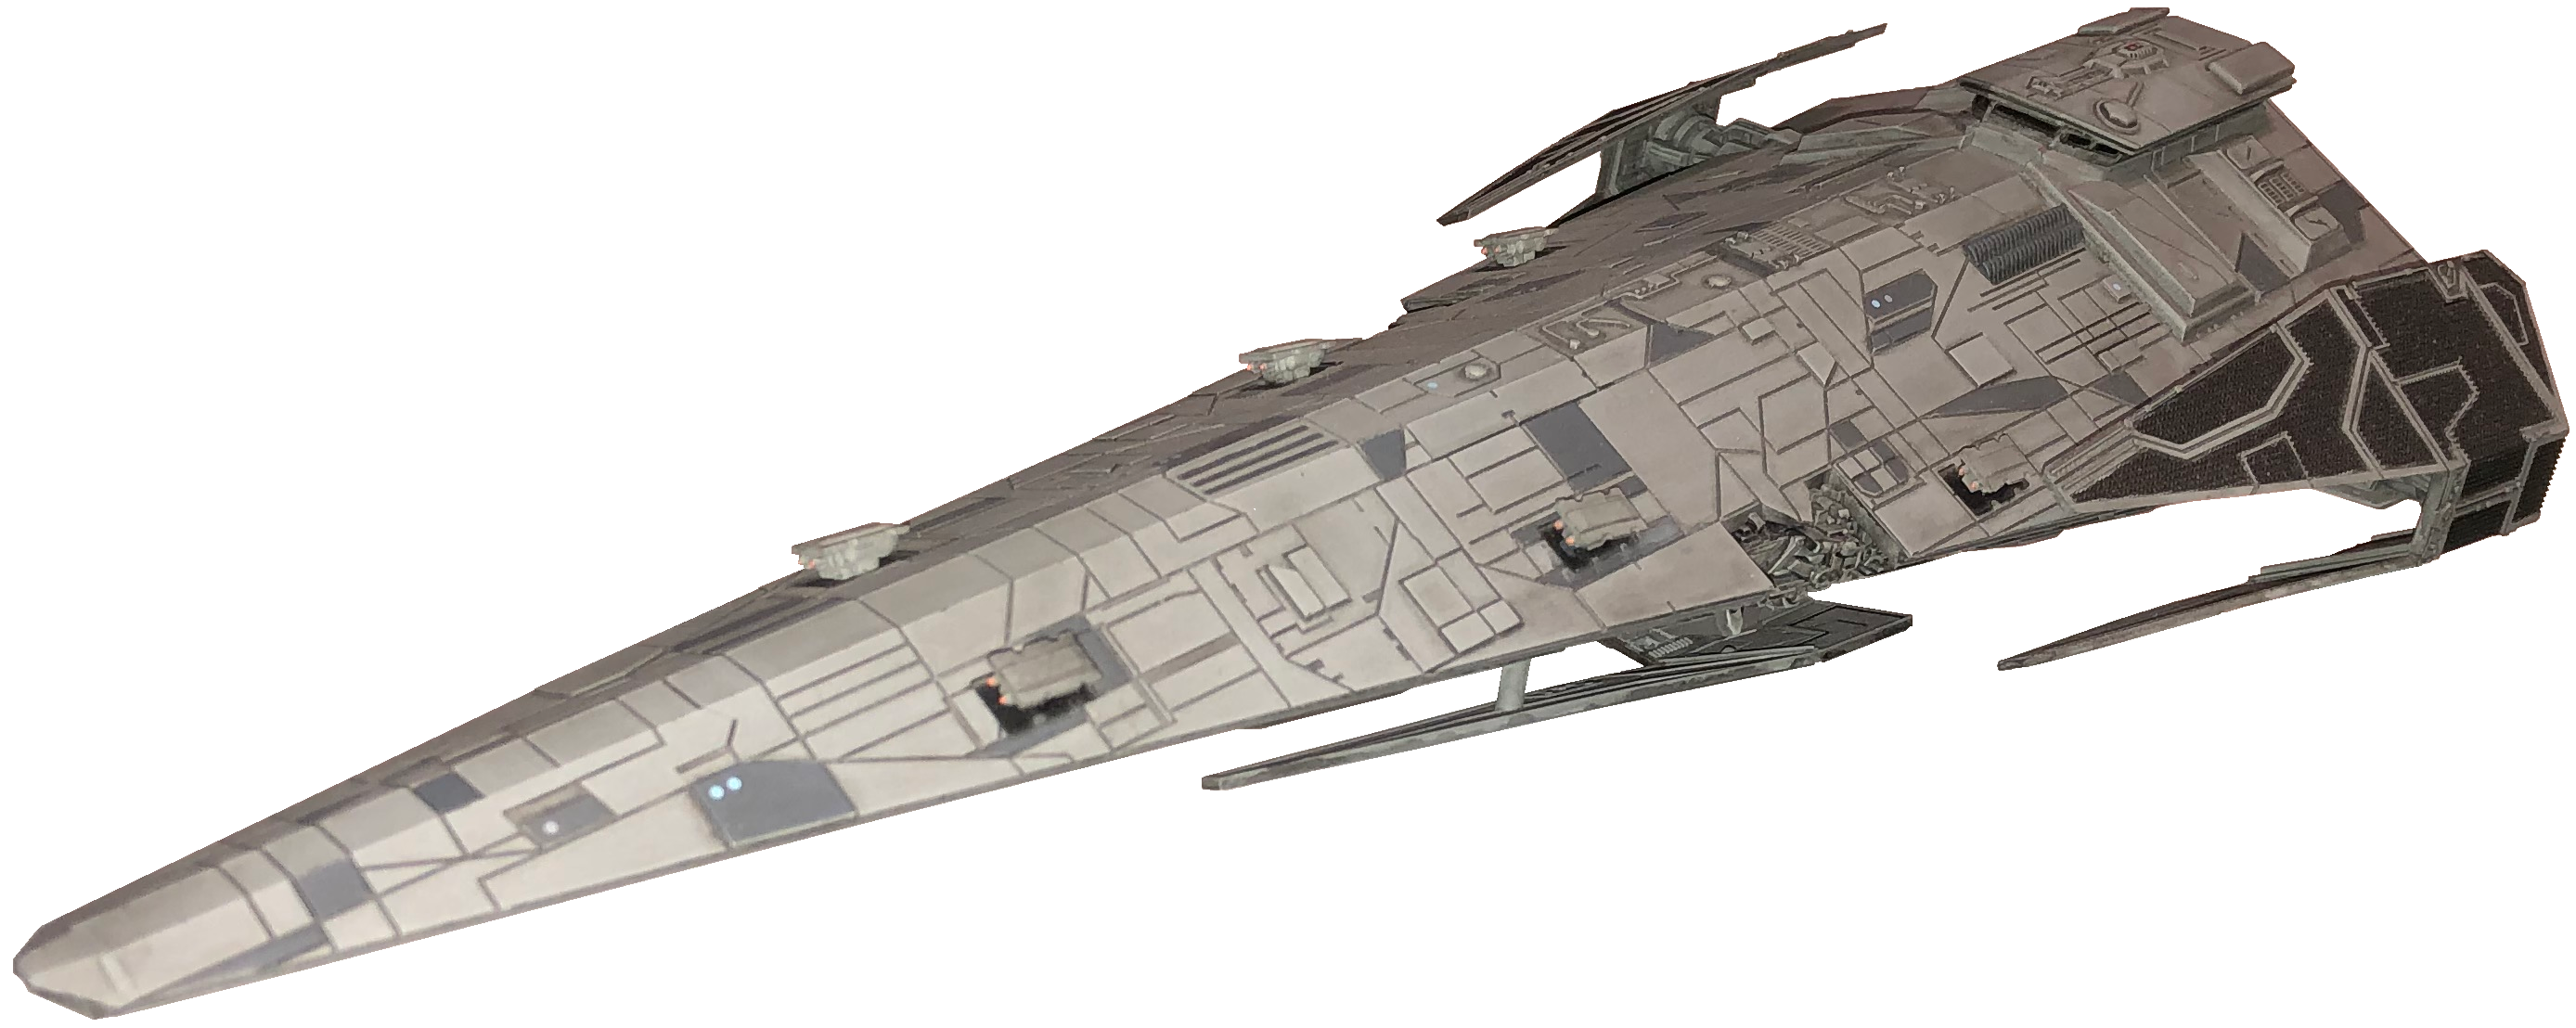 star wars raider class corvette